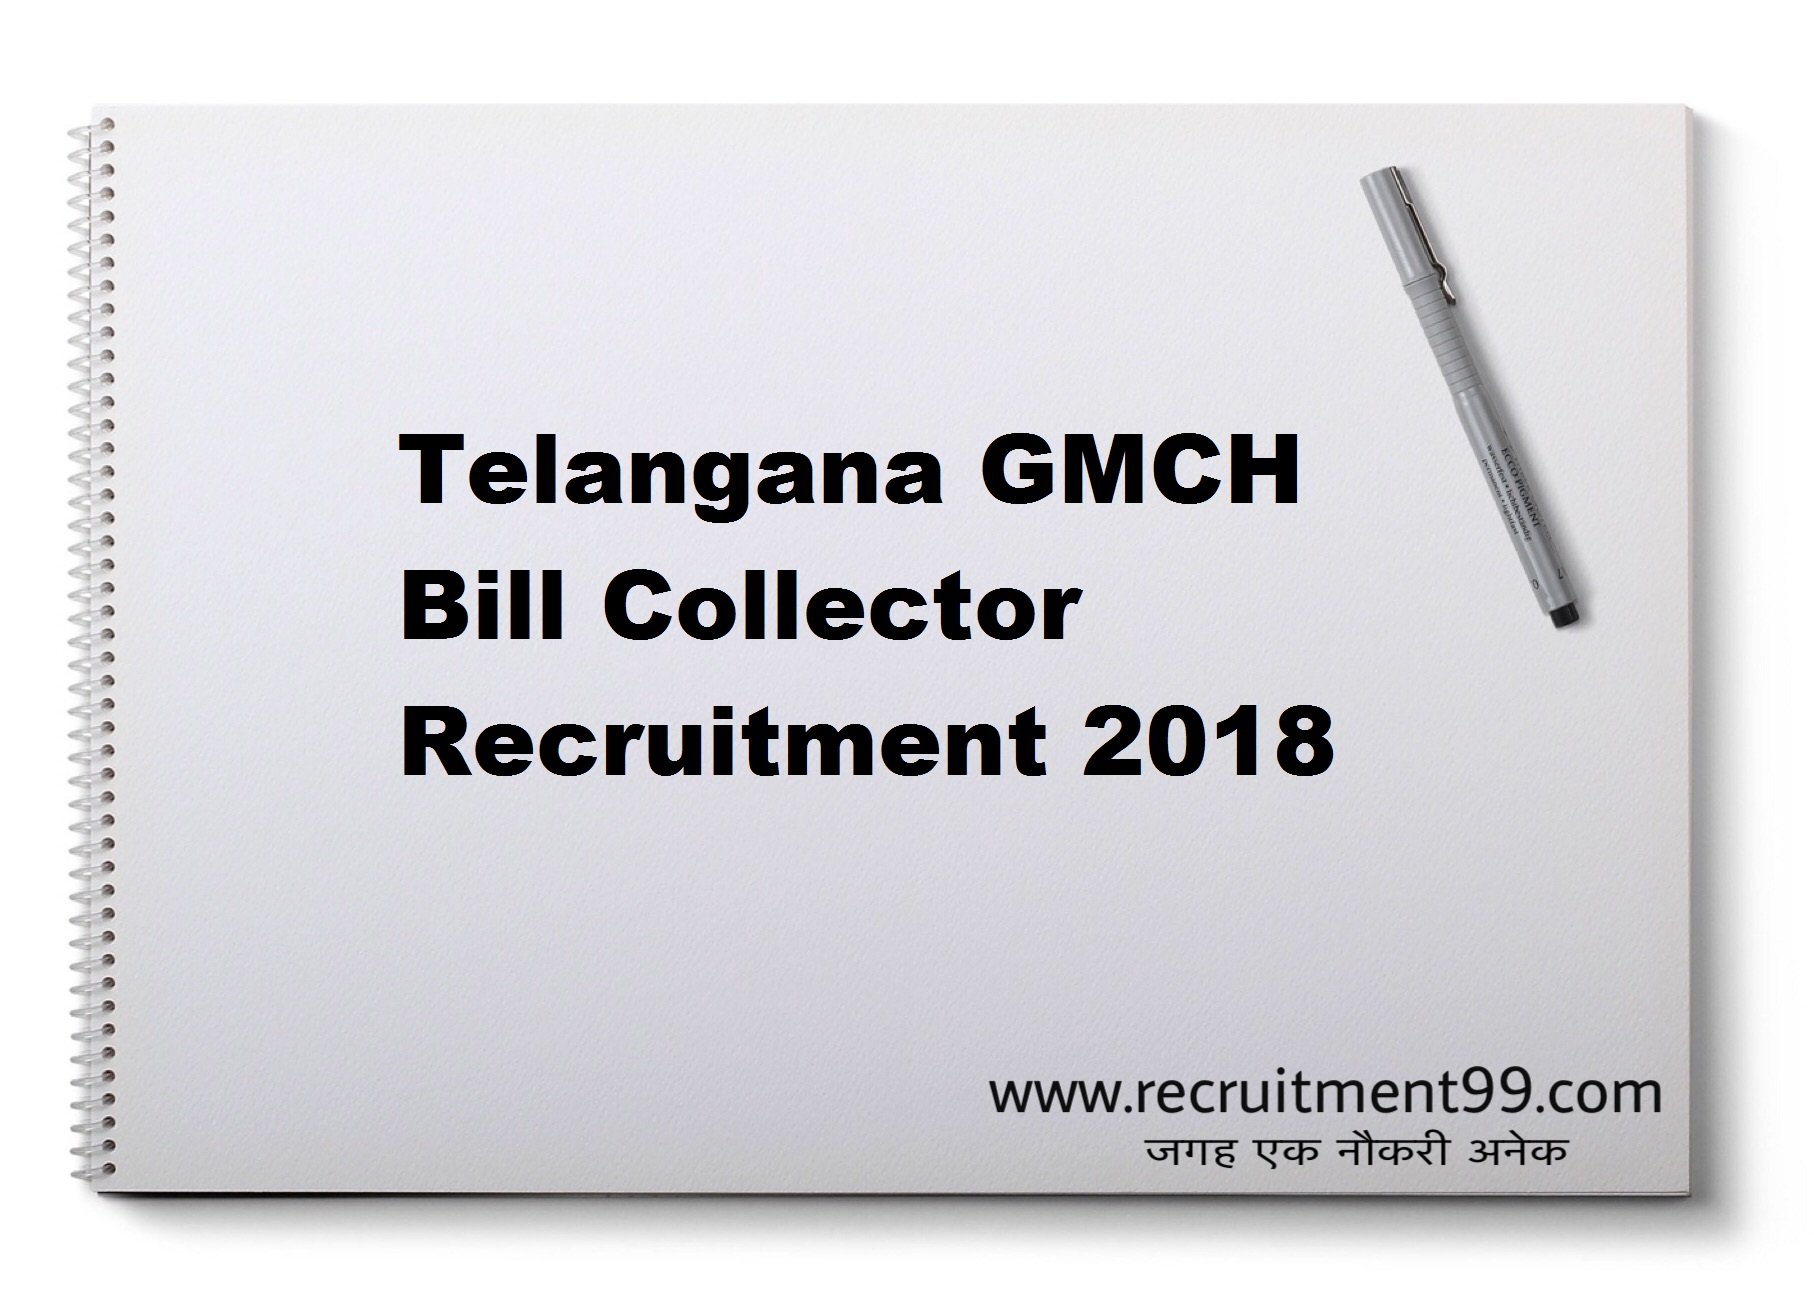 Telangana GMCH Bill Collector Recruitment Hall Ticket Result 2018